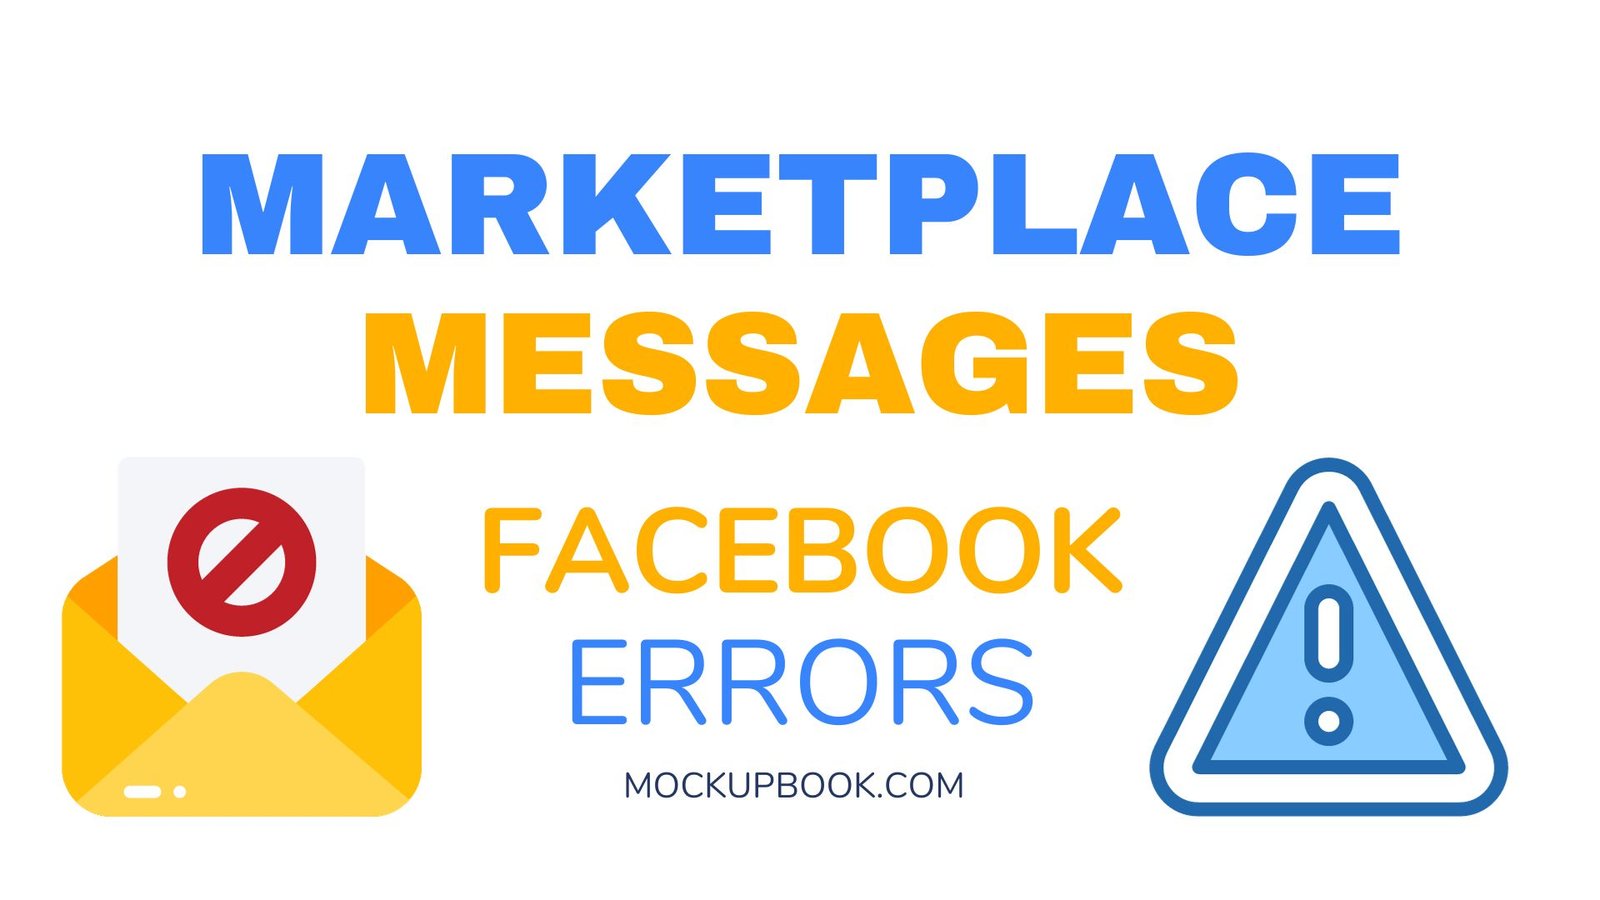 Facebook Messenger Marketplace Messages: A Comprehensive Guide